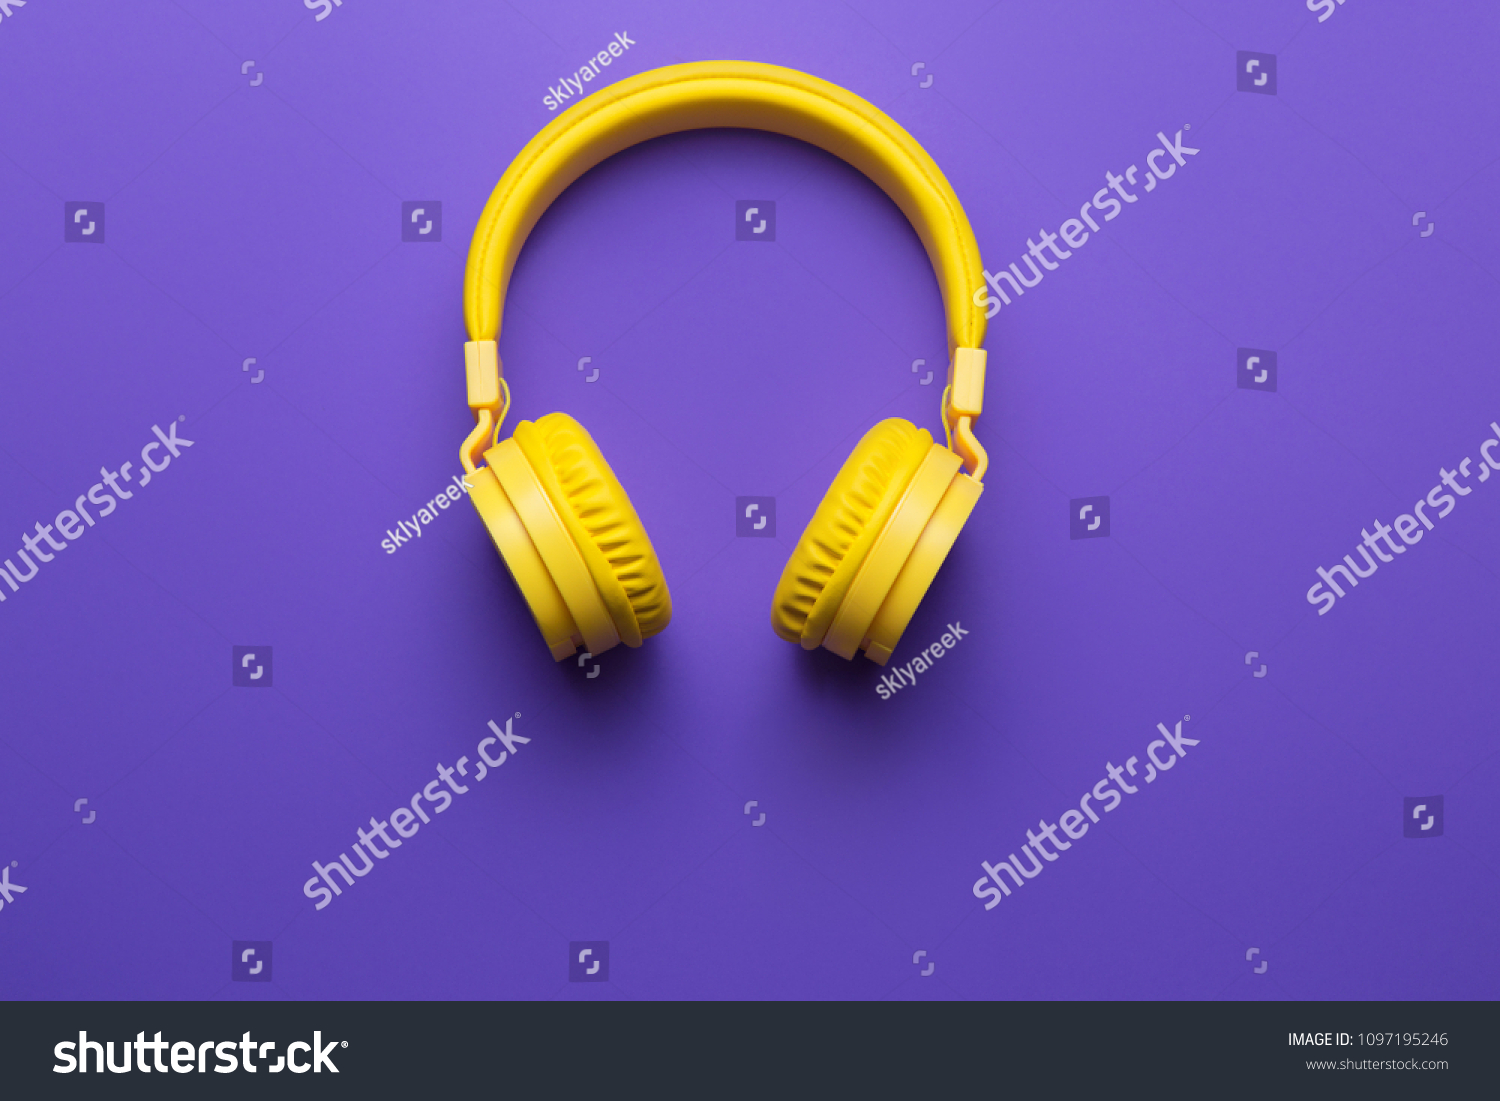 Yellow headphones on purple background. Music concept. #1097195246